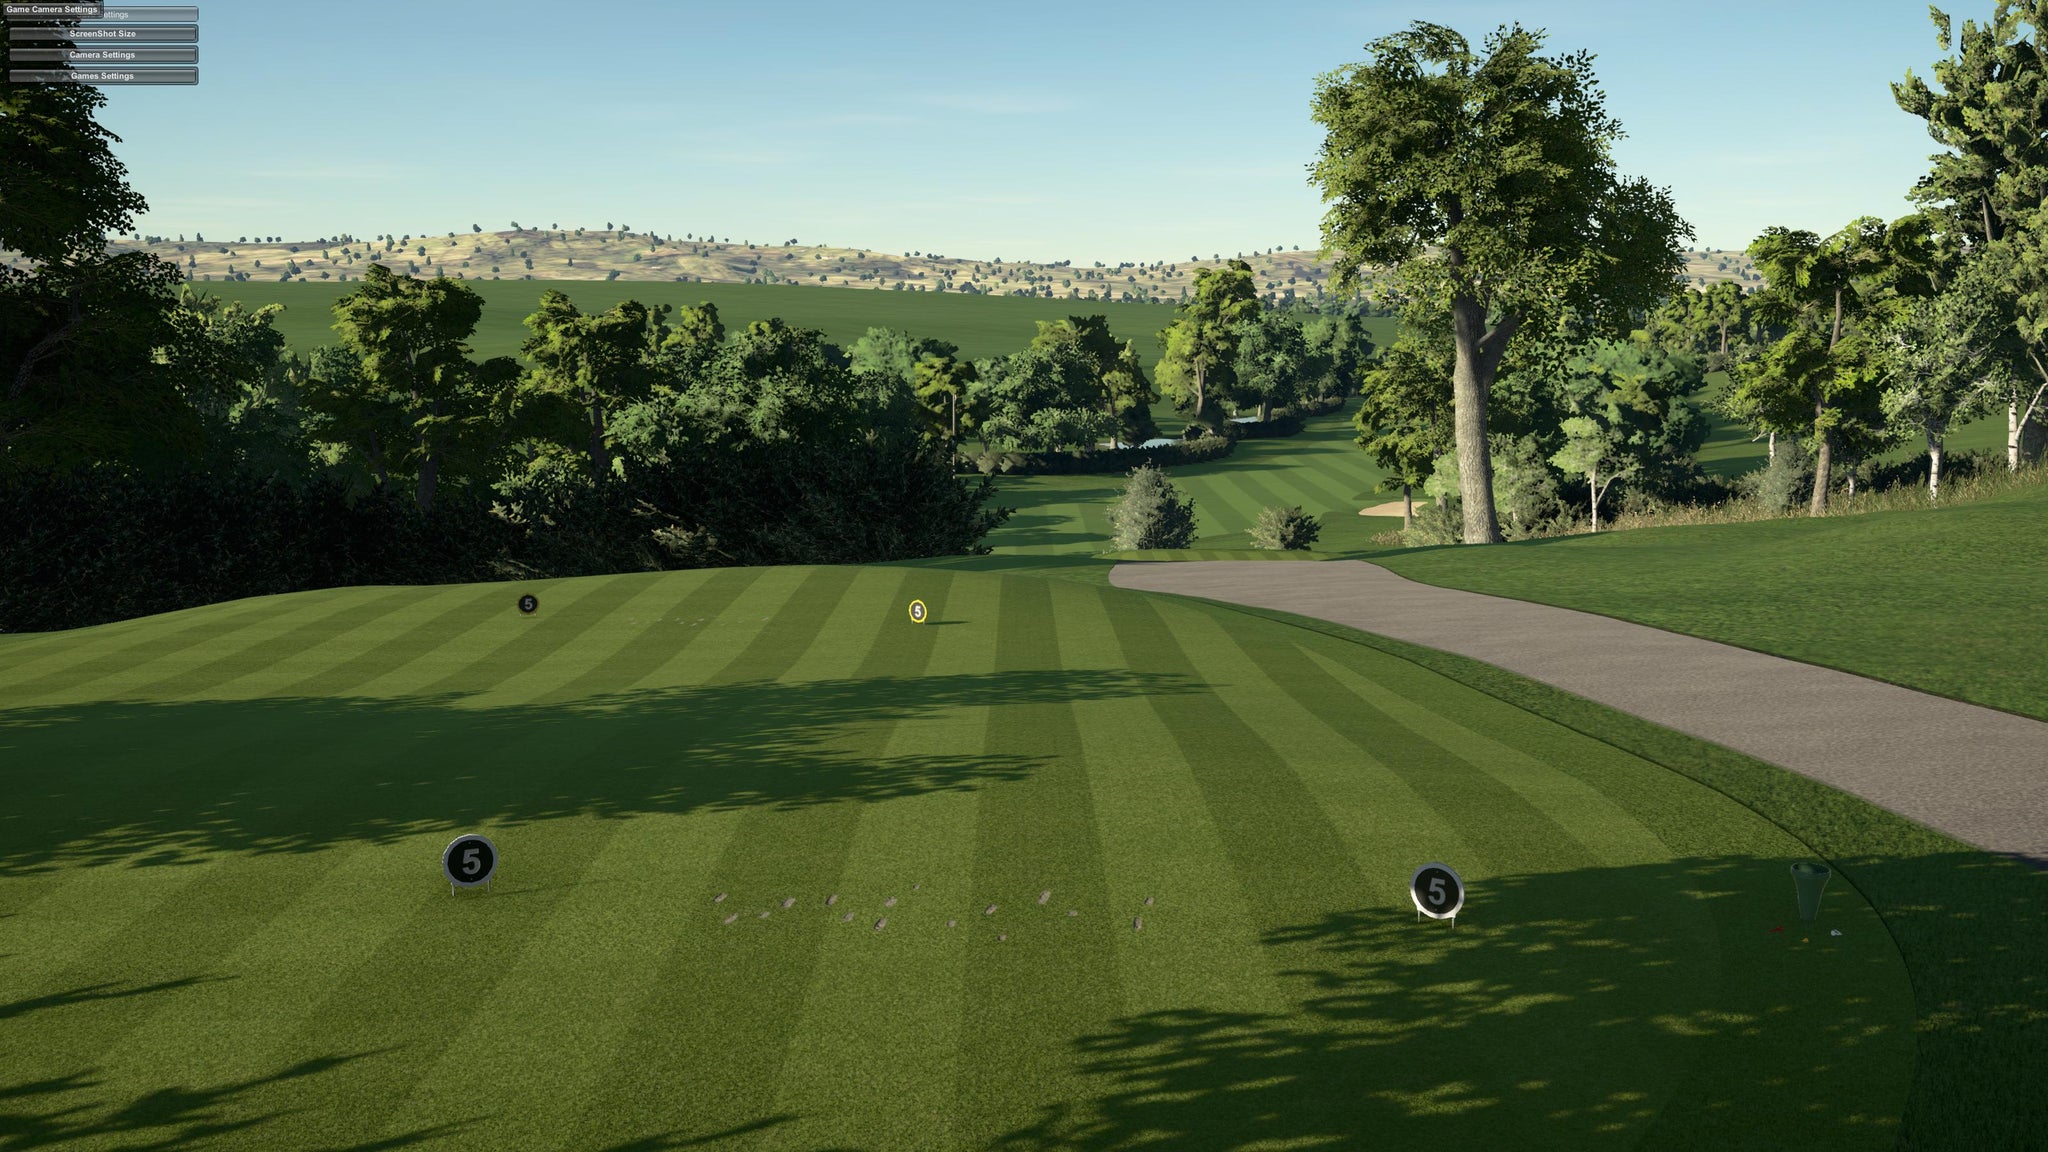 TGC2019 Golfsimulator-Software